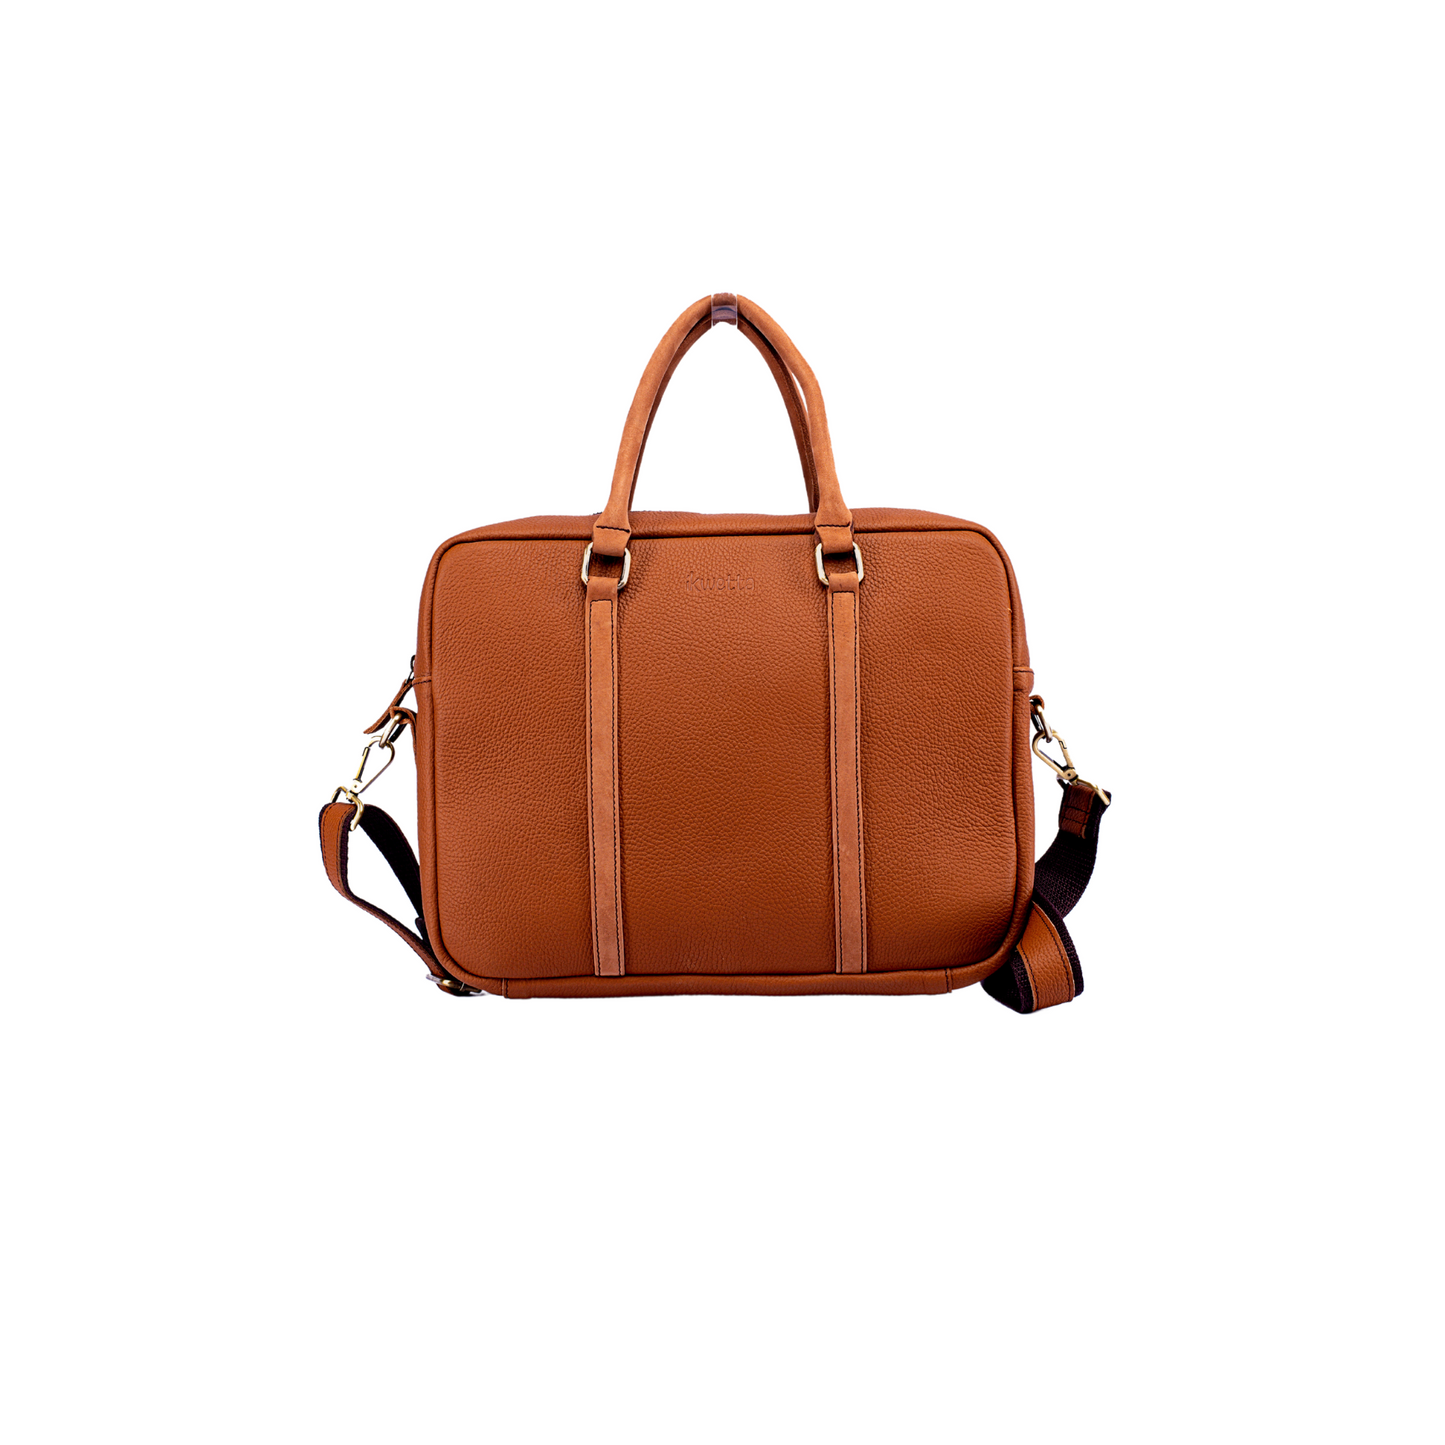 Cory laptop bag in Sugar almond milled leather with adjustable shoulder strap